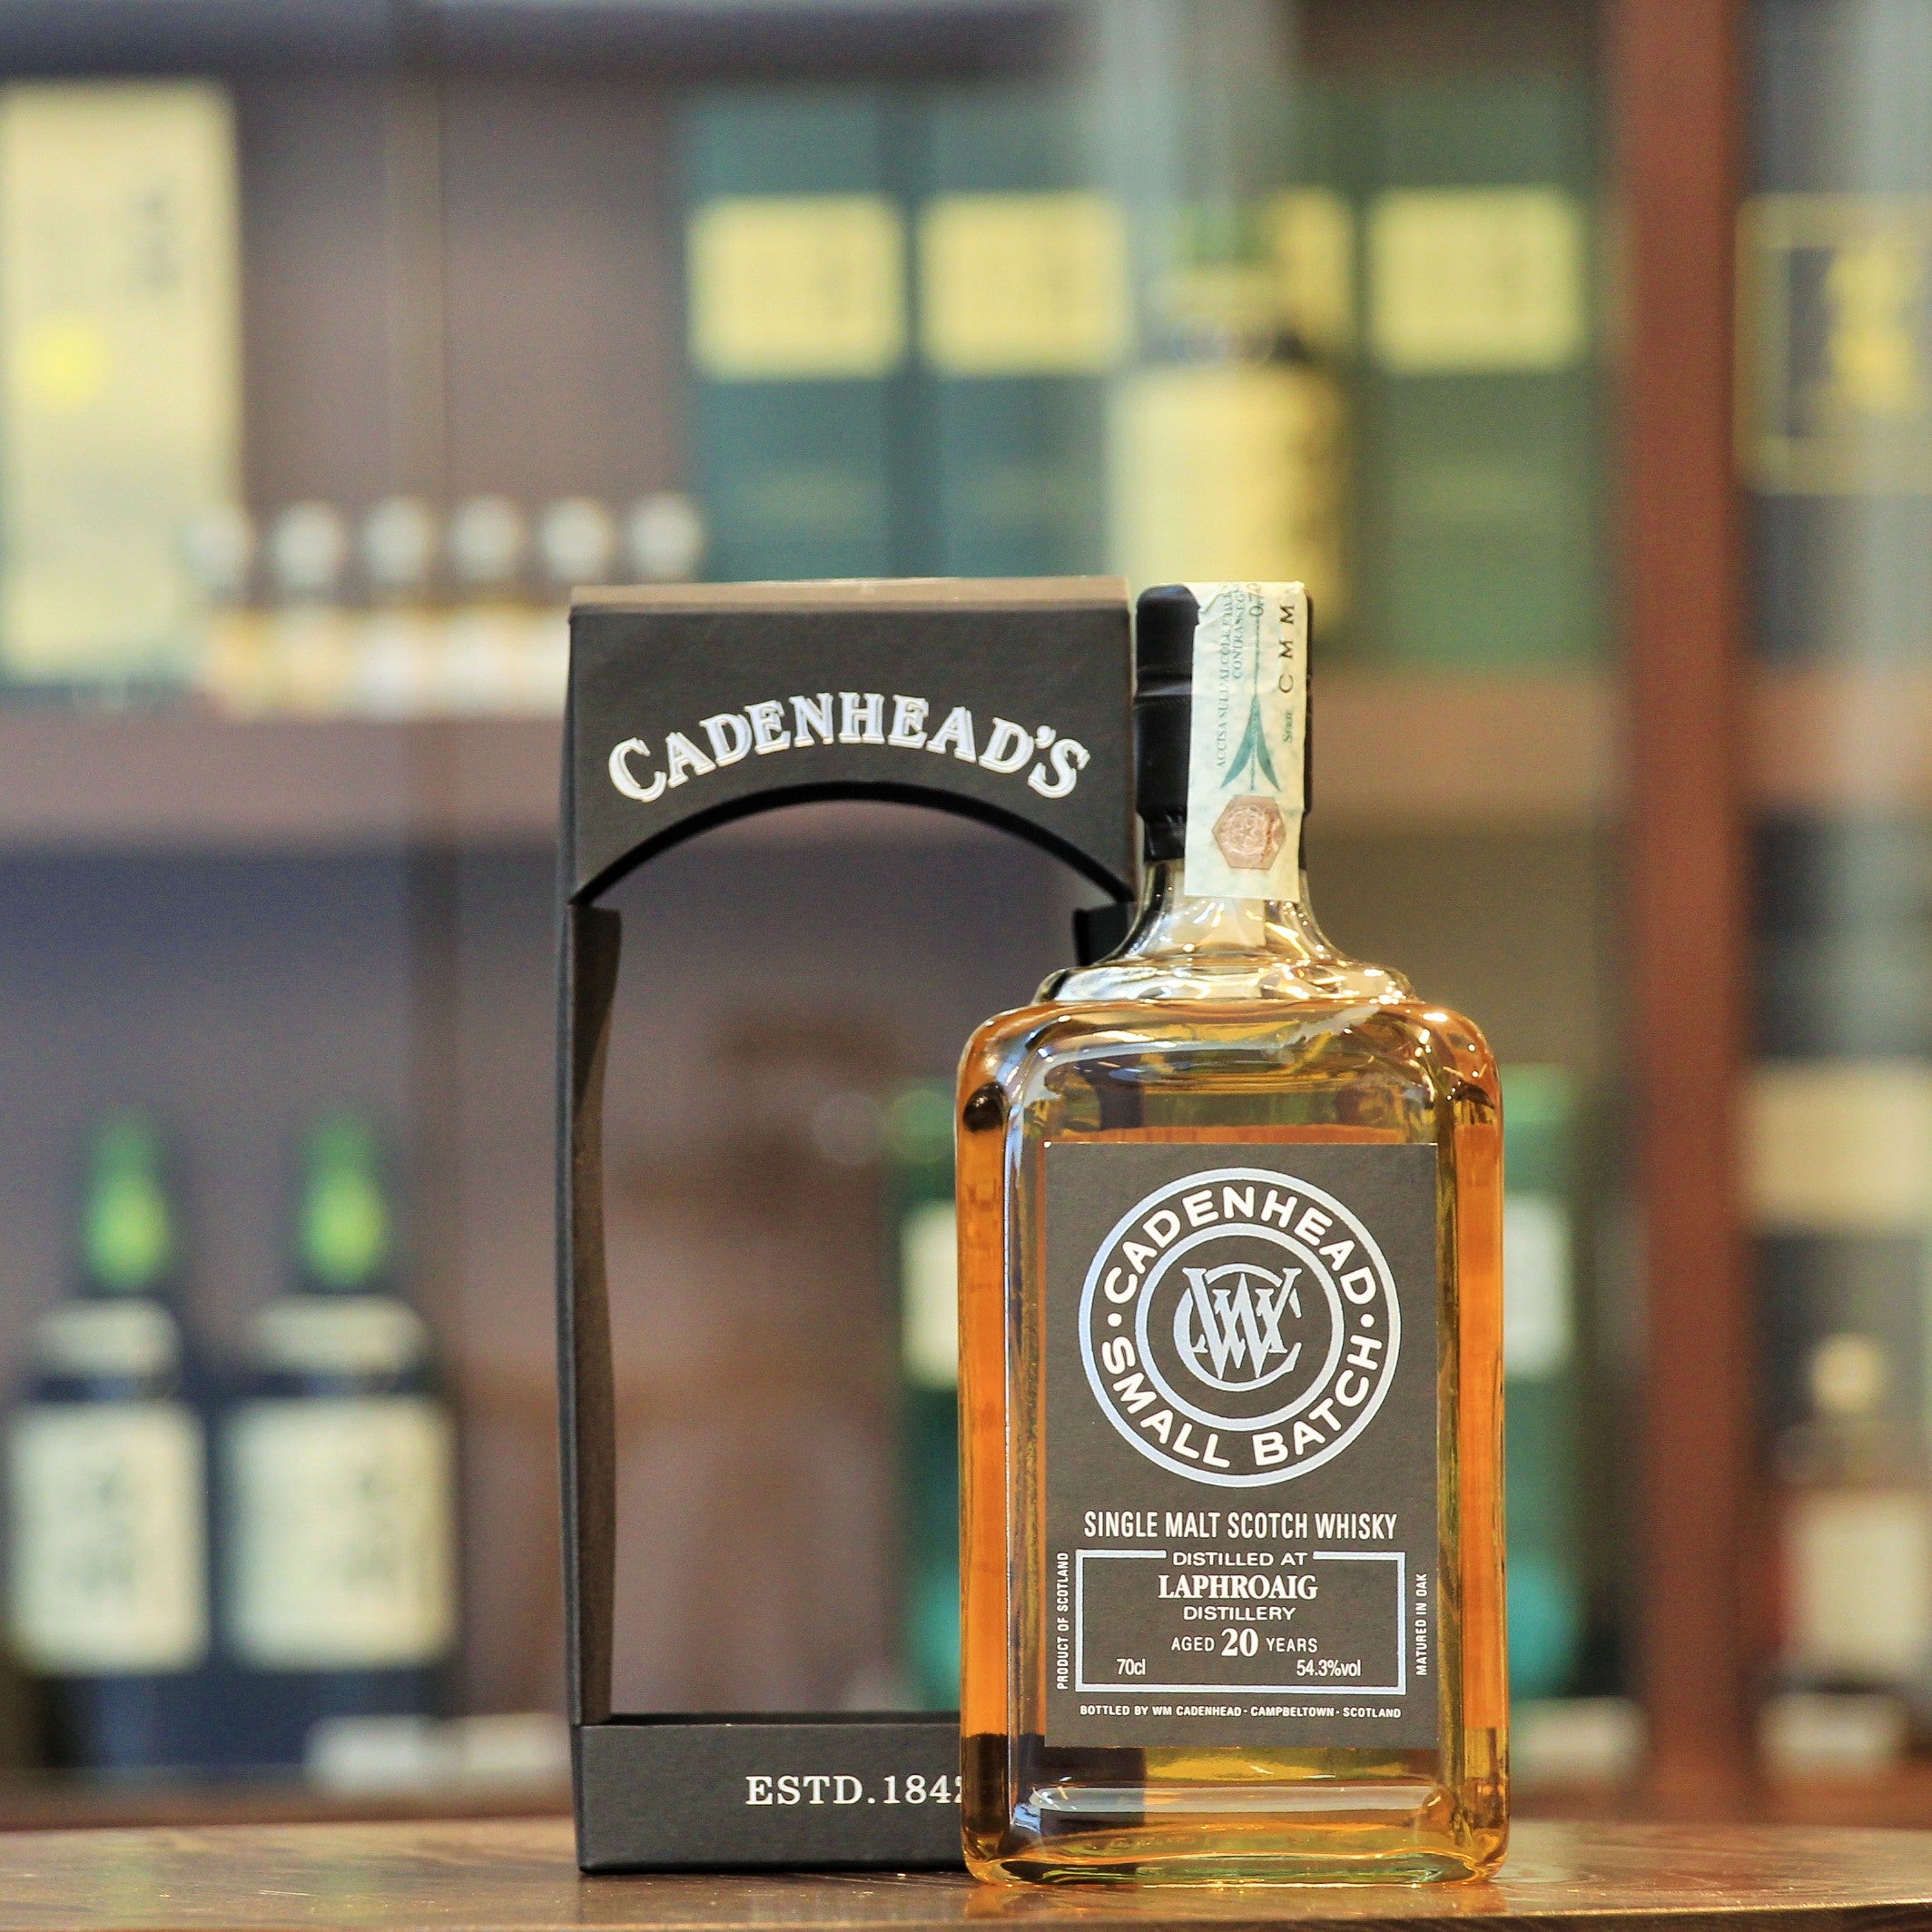 Laphroaig 20 Years Cask Strength Single Malt Scotch Whisky by Cadenheads